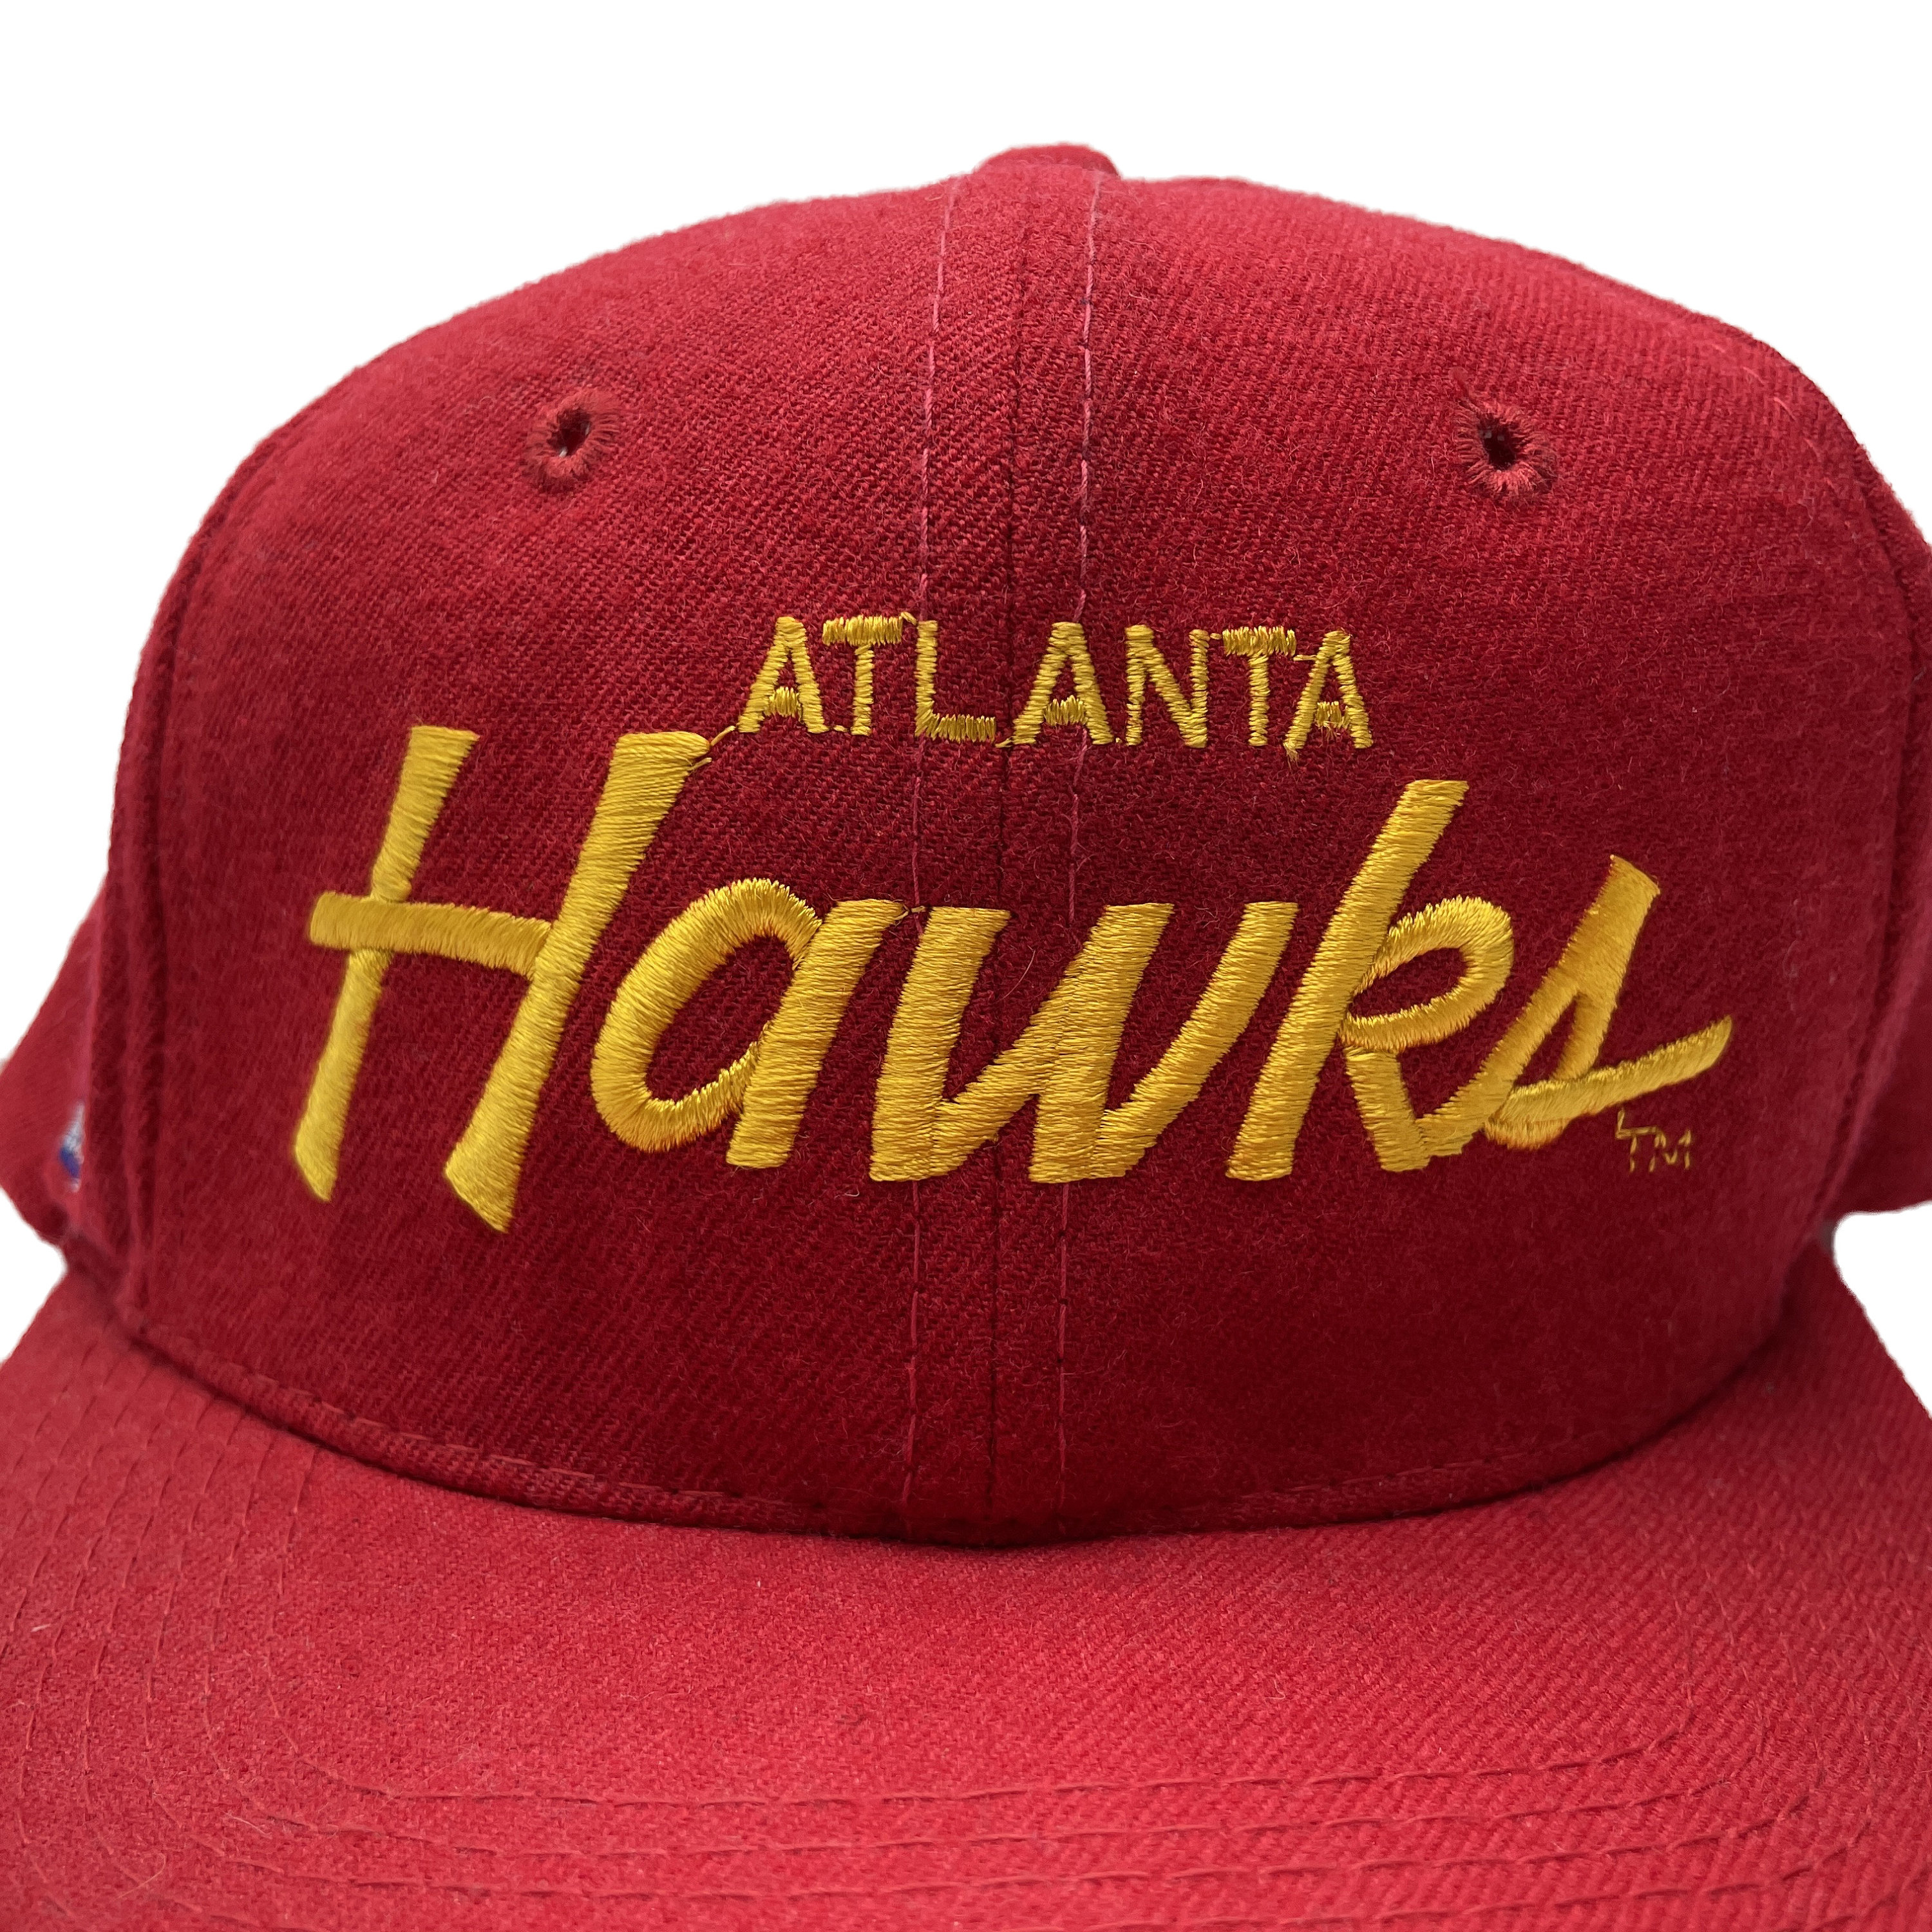 Vintage Atlanta Hawks Snapback Hat Adjustable 90s NBA Basketball by Logo 7  NEW with Tags